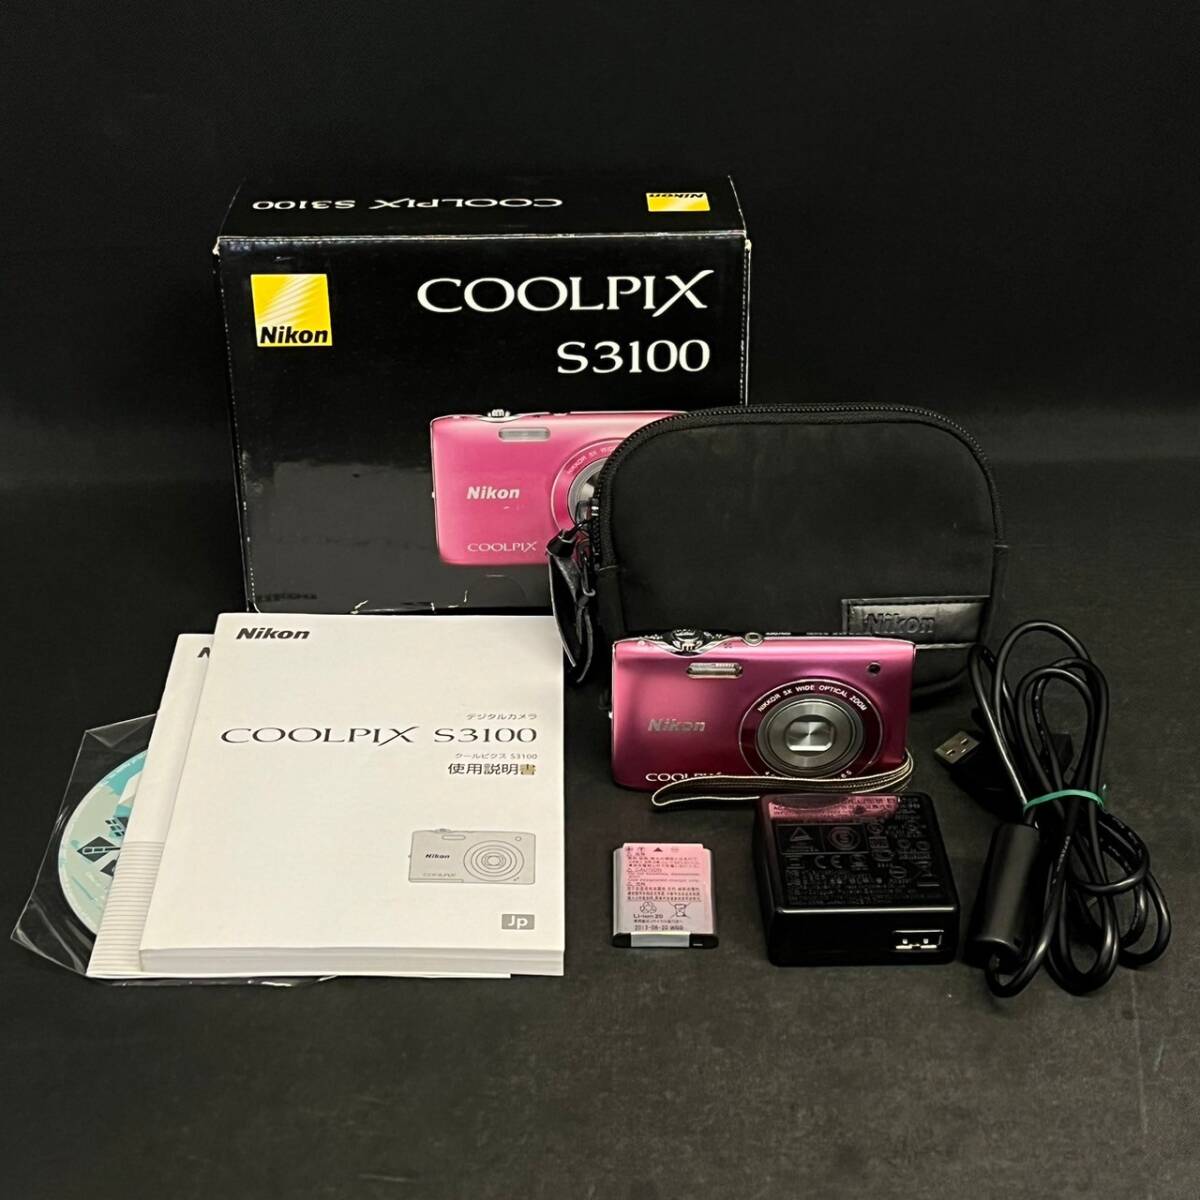 BCd065I 60 箱付き Nikon COOLPIX S3100 クールピクス NIKKOR 5X WIDE OPTICAL ZOOM 4.6-23.0mm 1:3.2-6.5 ピンク デジタルカメラ 顔認識の画像1